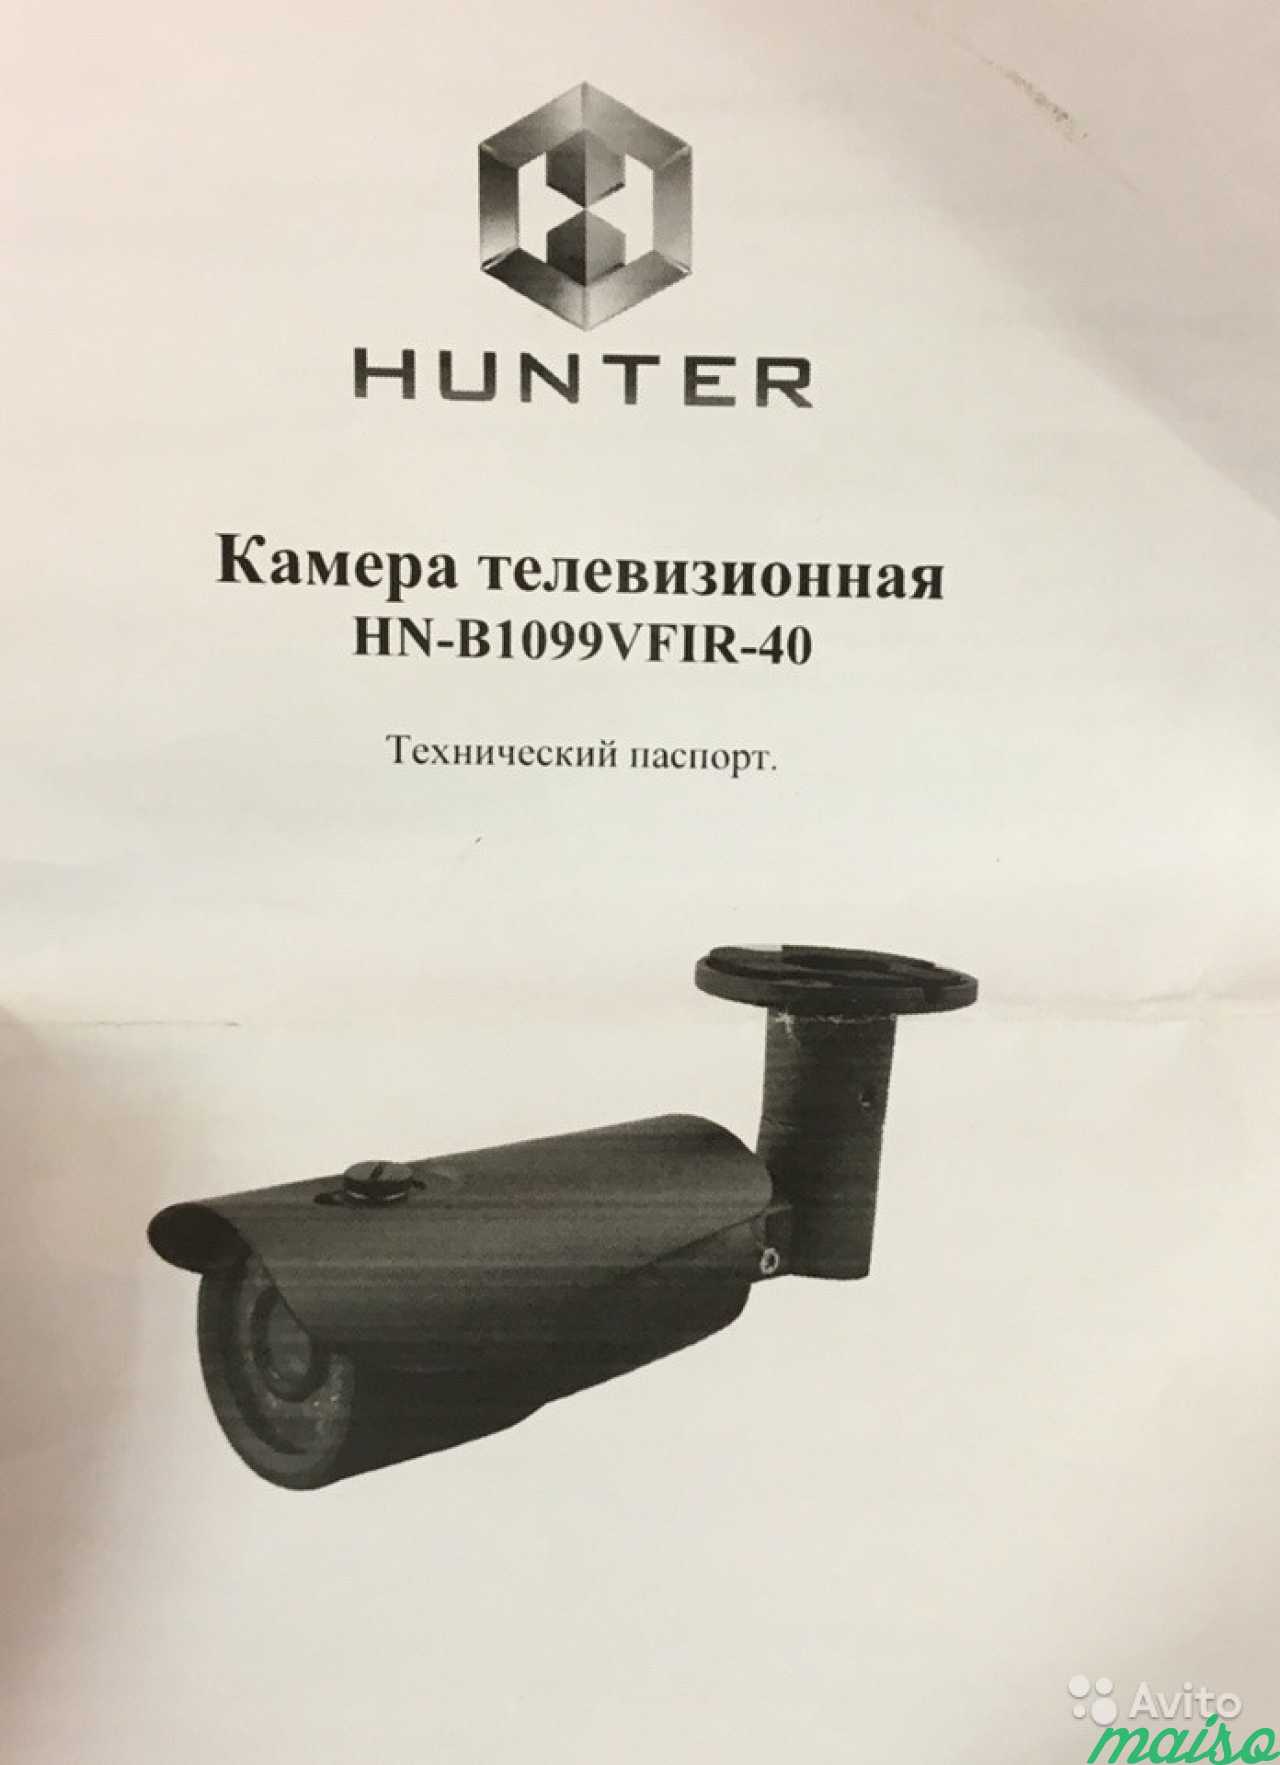 Камера Hunter HN-B1099vfir в Санкт-Петербурге. Фото 3